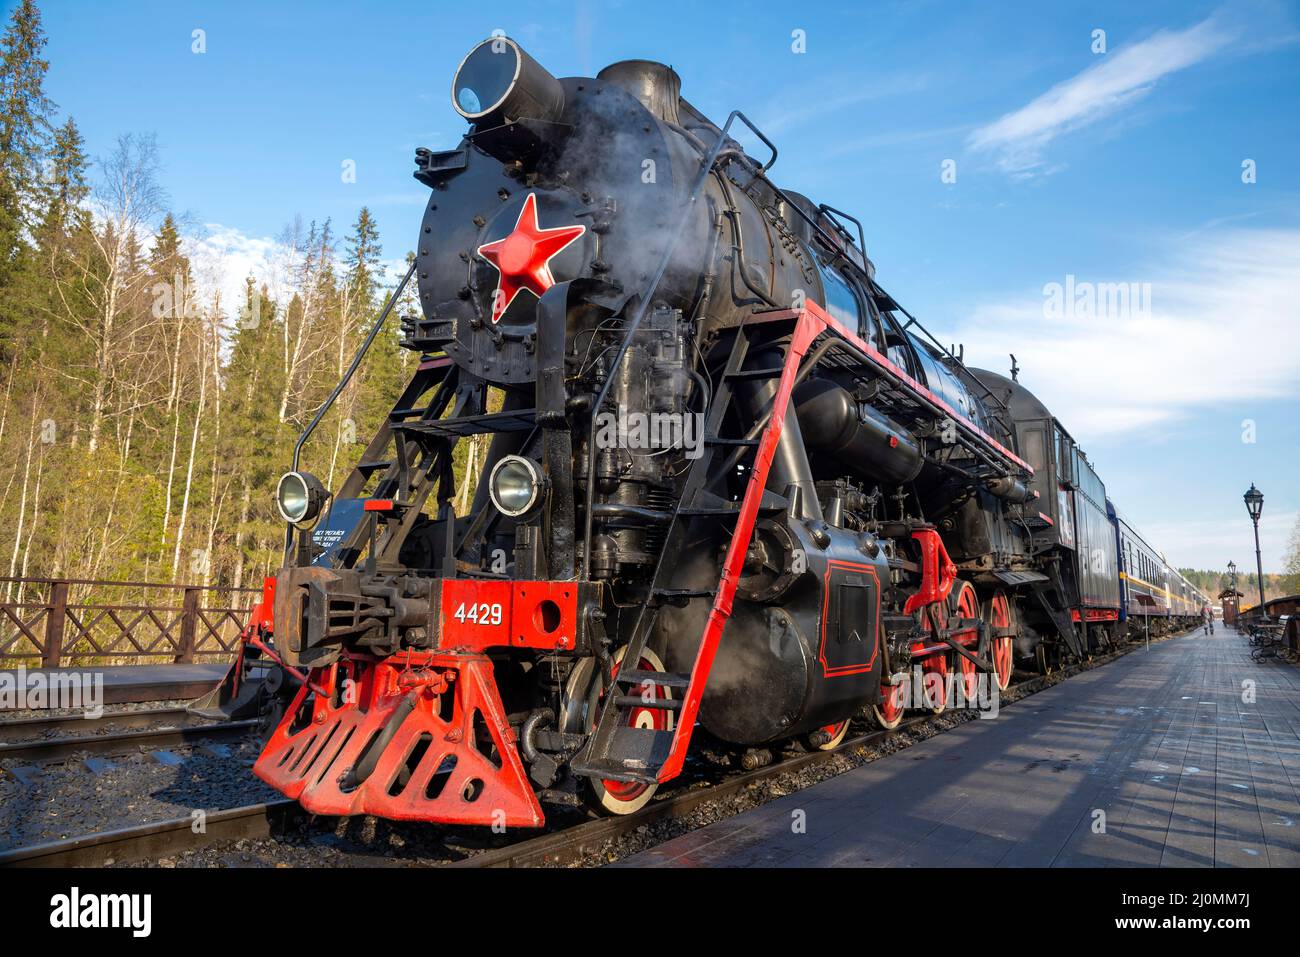 RUSKEALA, RUSSIA - OCTOBER 07, 2021: Tourist retro train 'Ruskeala Express' at the station 'Mountain Park Ruskeala' Stock Photo